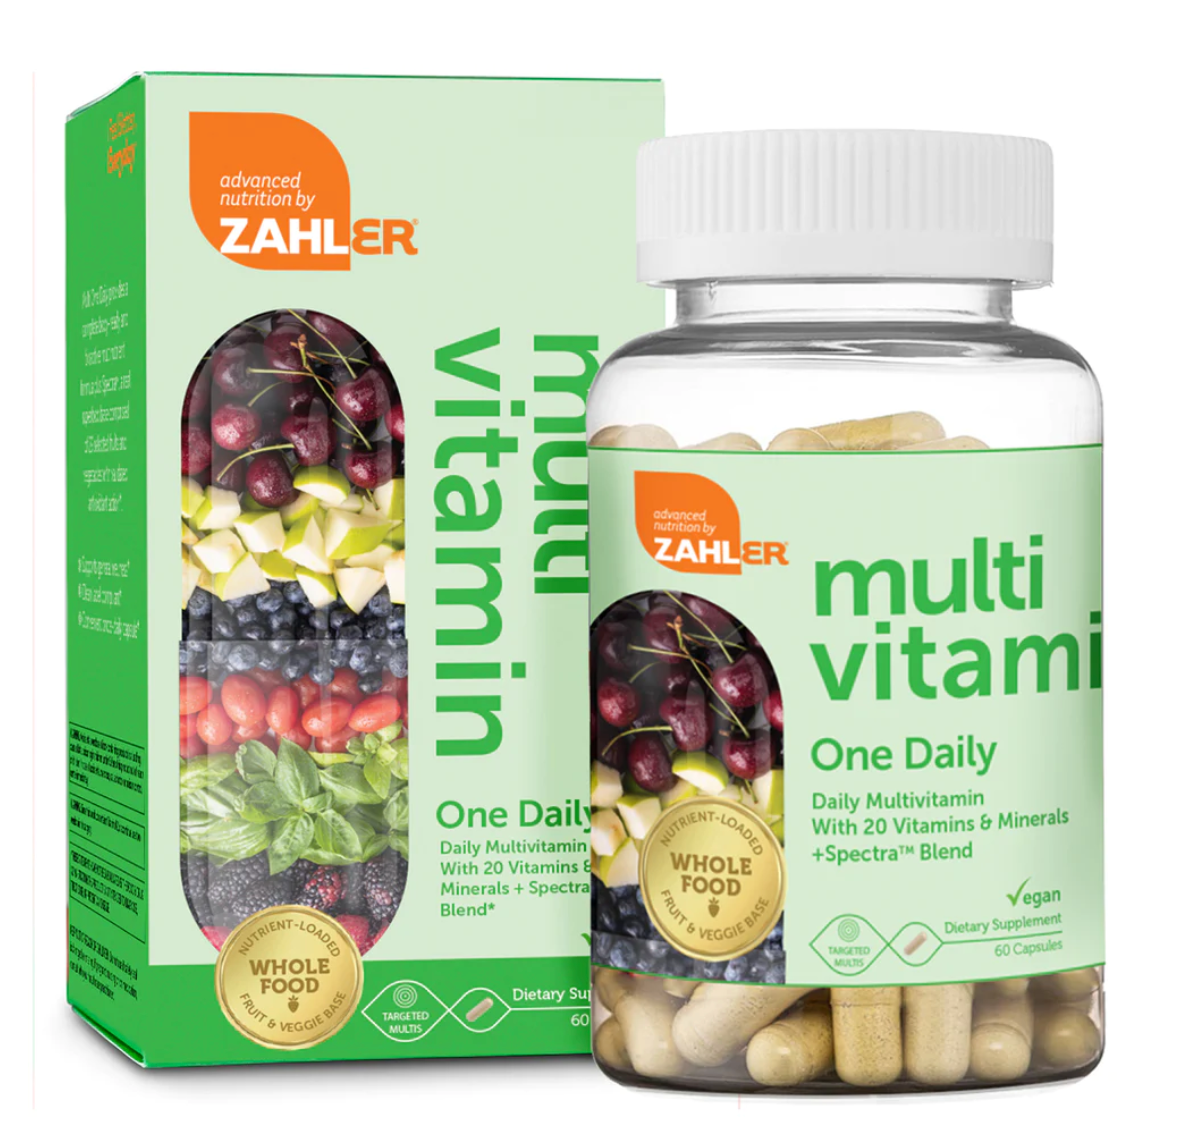 DesBio MULTI Whole Food Vitamins & Minerals - 0